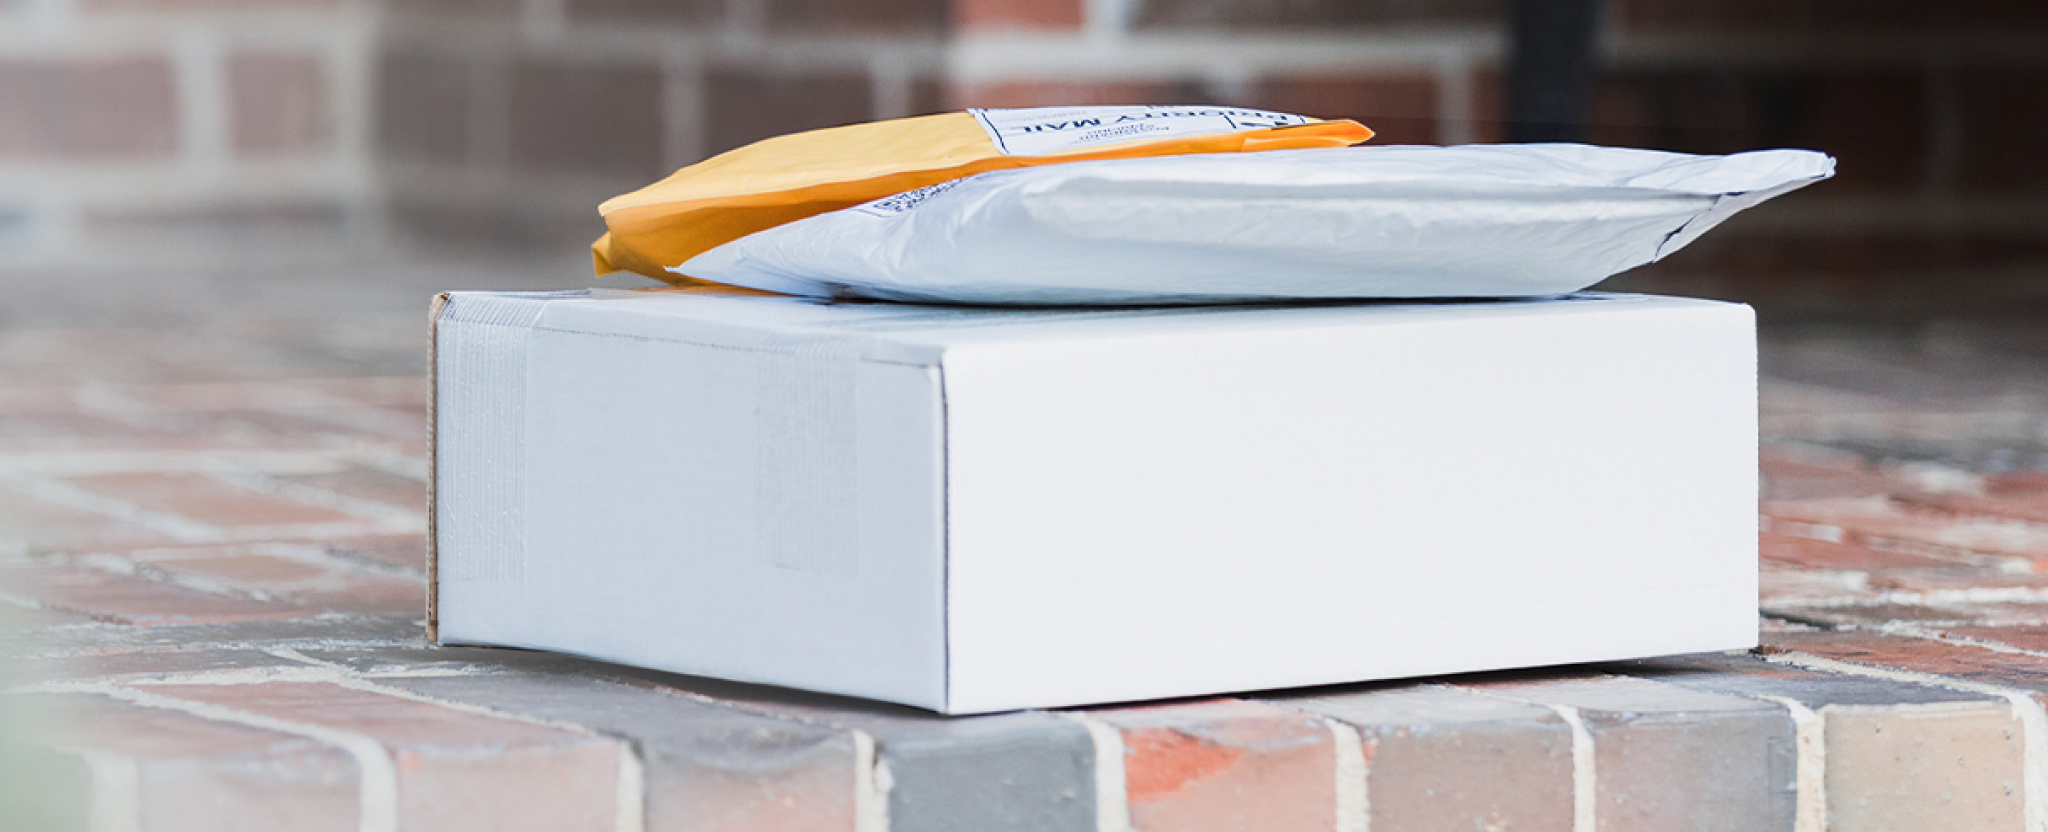 Delivered packages sit on a doorstep.